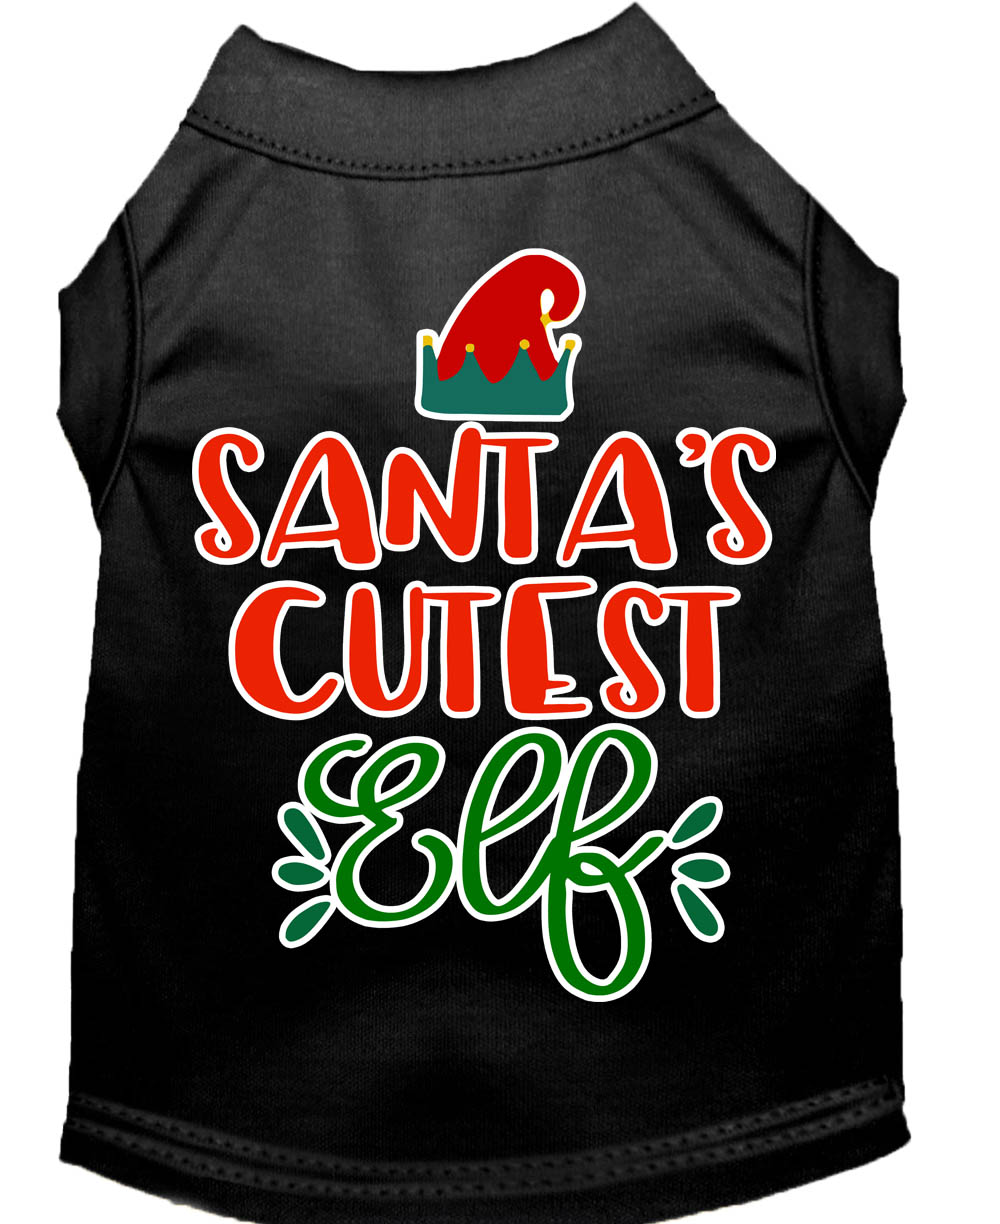 Santa's Cutest Elf Screen Print Dog Shirt Black Lg